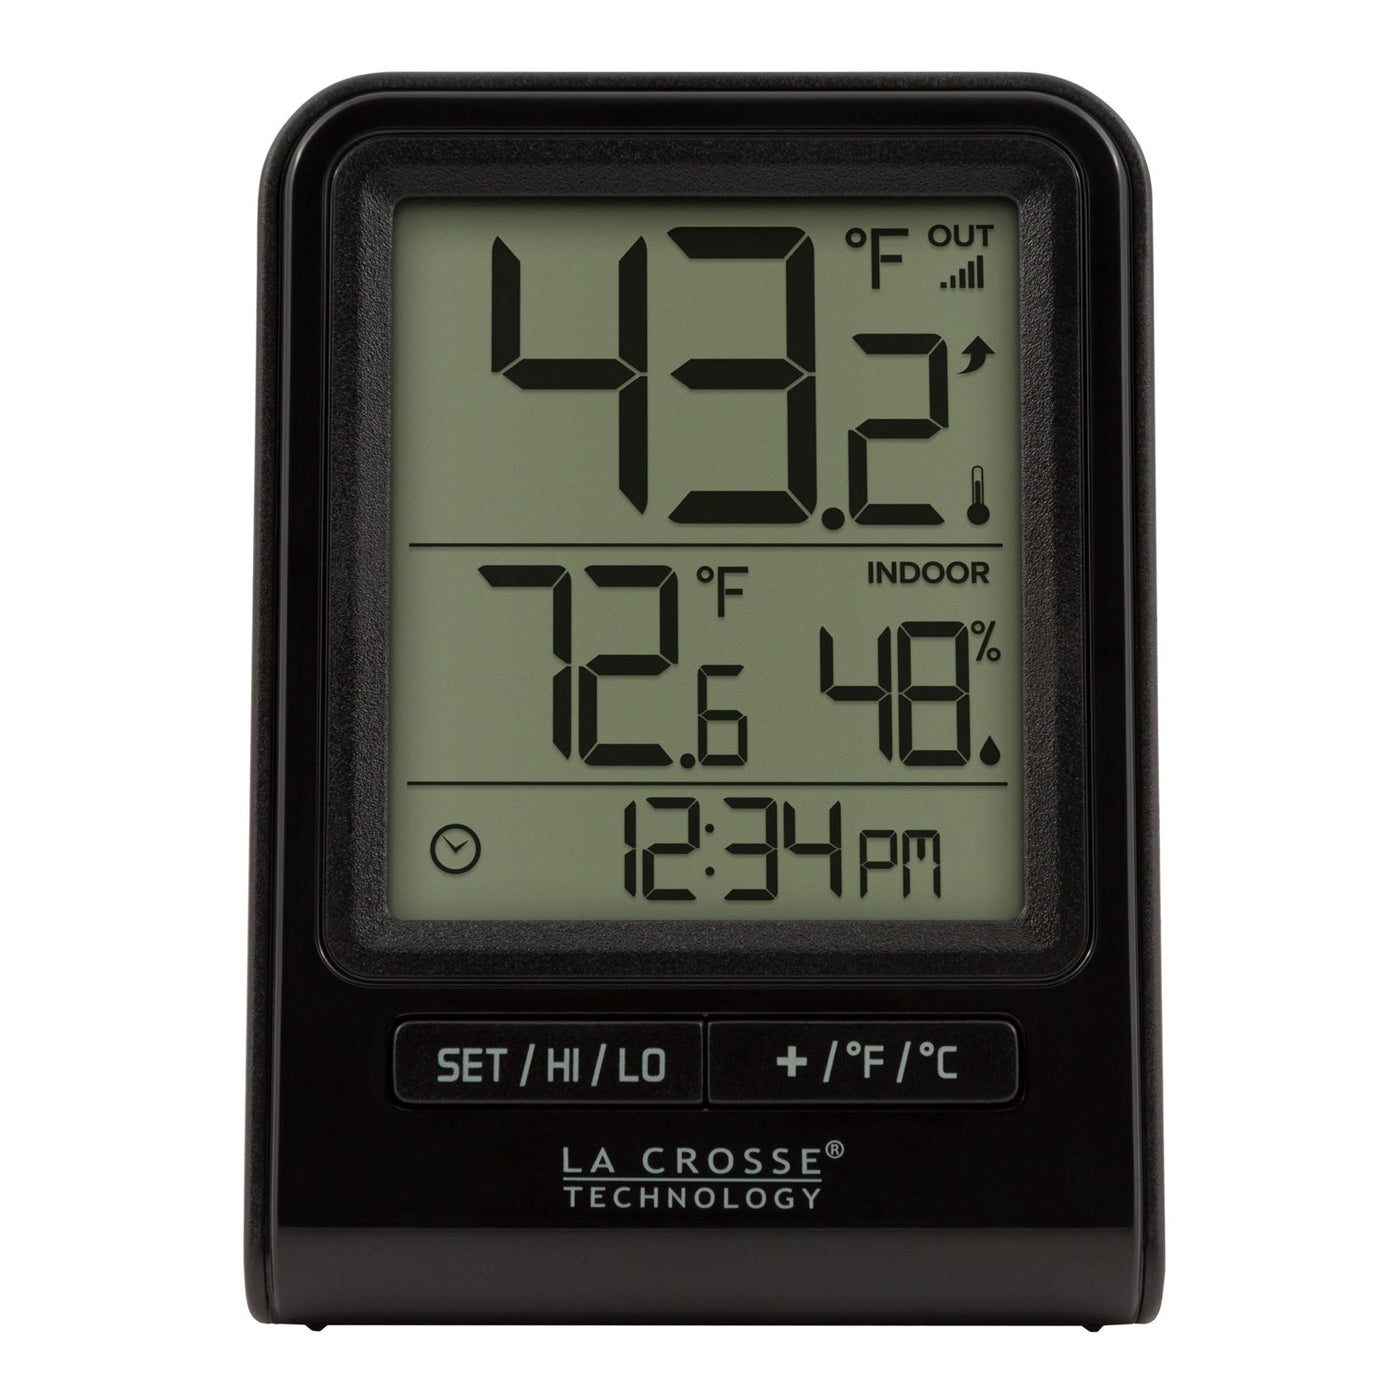 LA CROSSE TECHNOLOGY LTD Wireless Indoor/Outdoor Thermometer